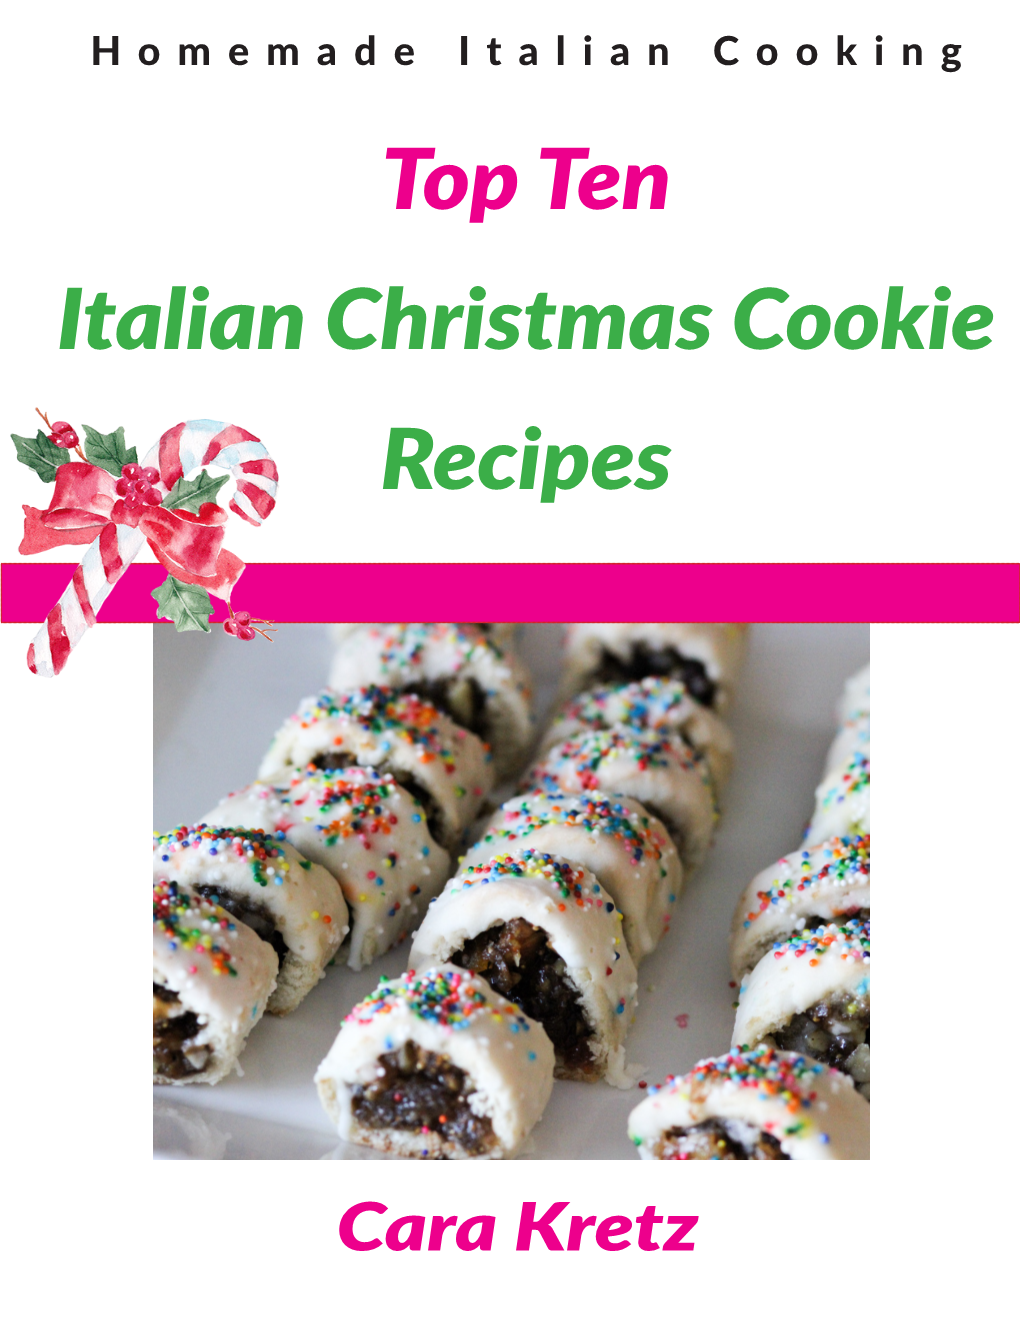 Top Ten Italian Christmas Cookie Recipes